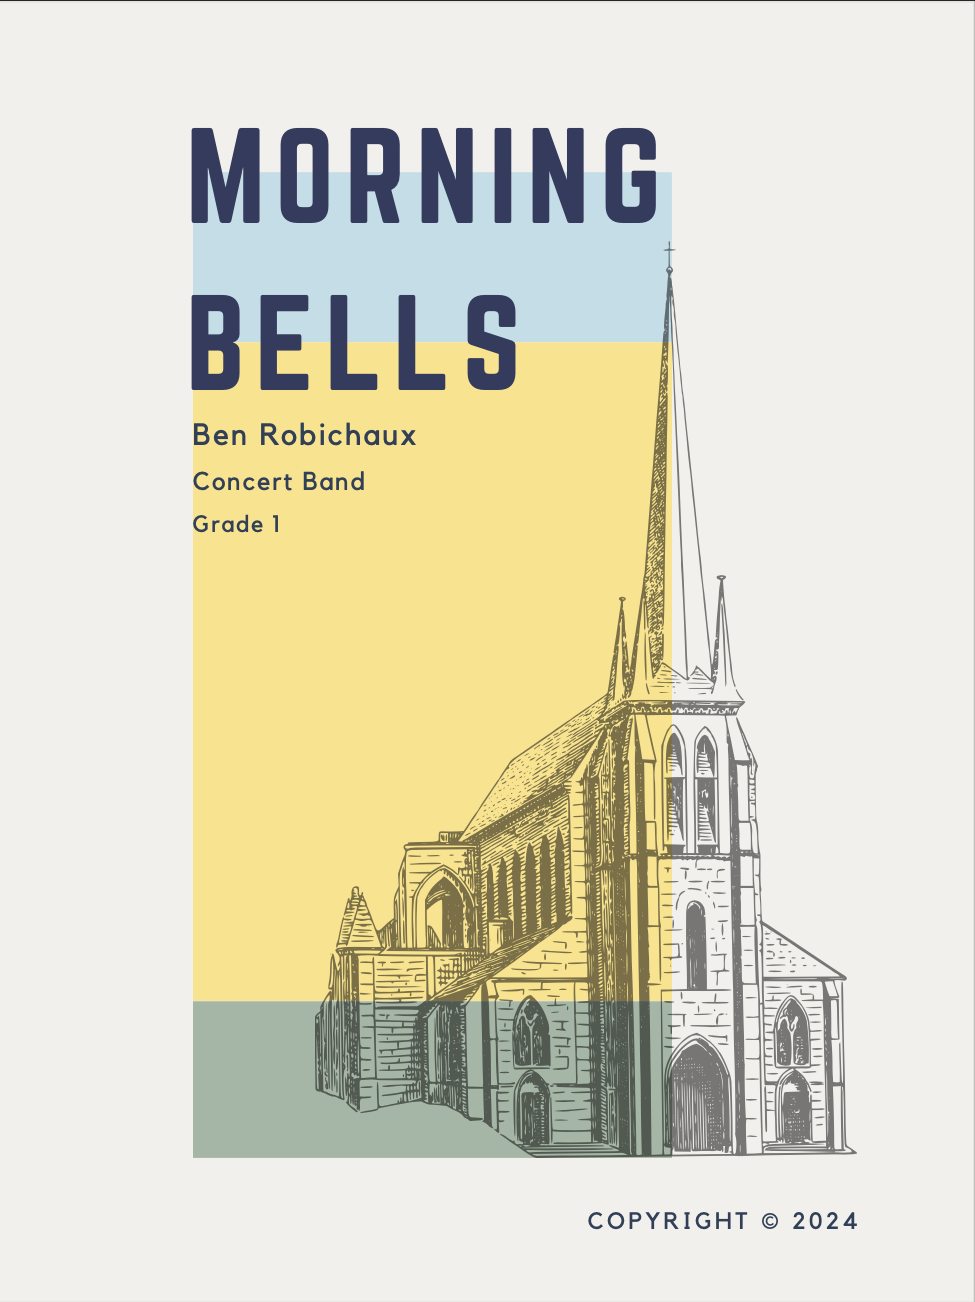 Morning Bells by Ben Robichaux